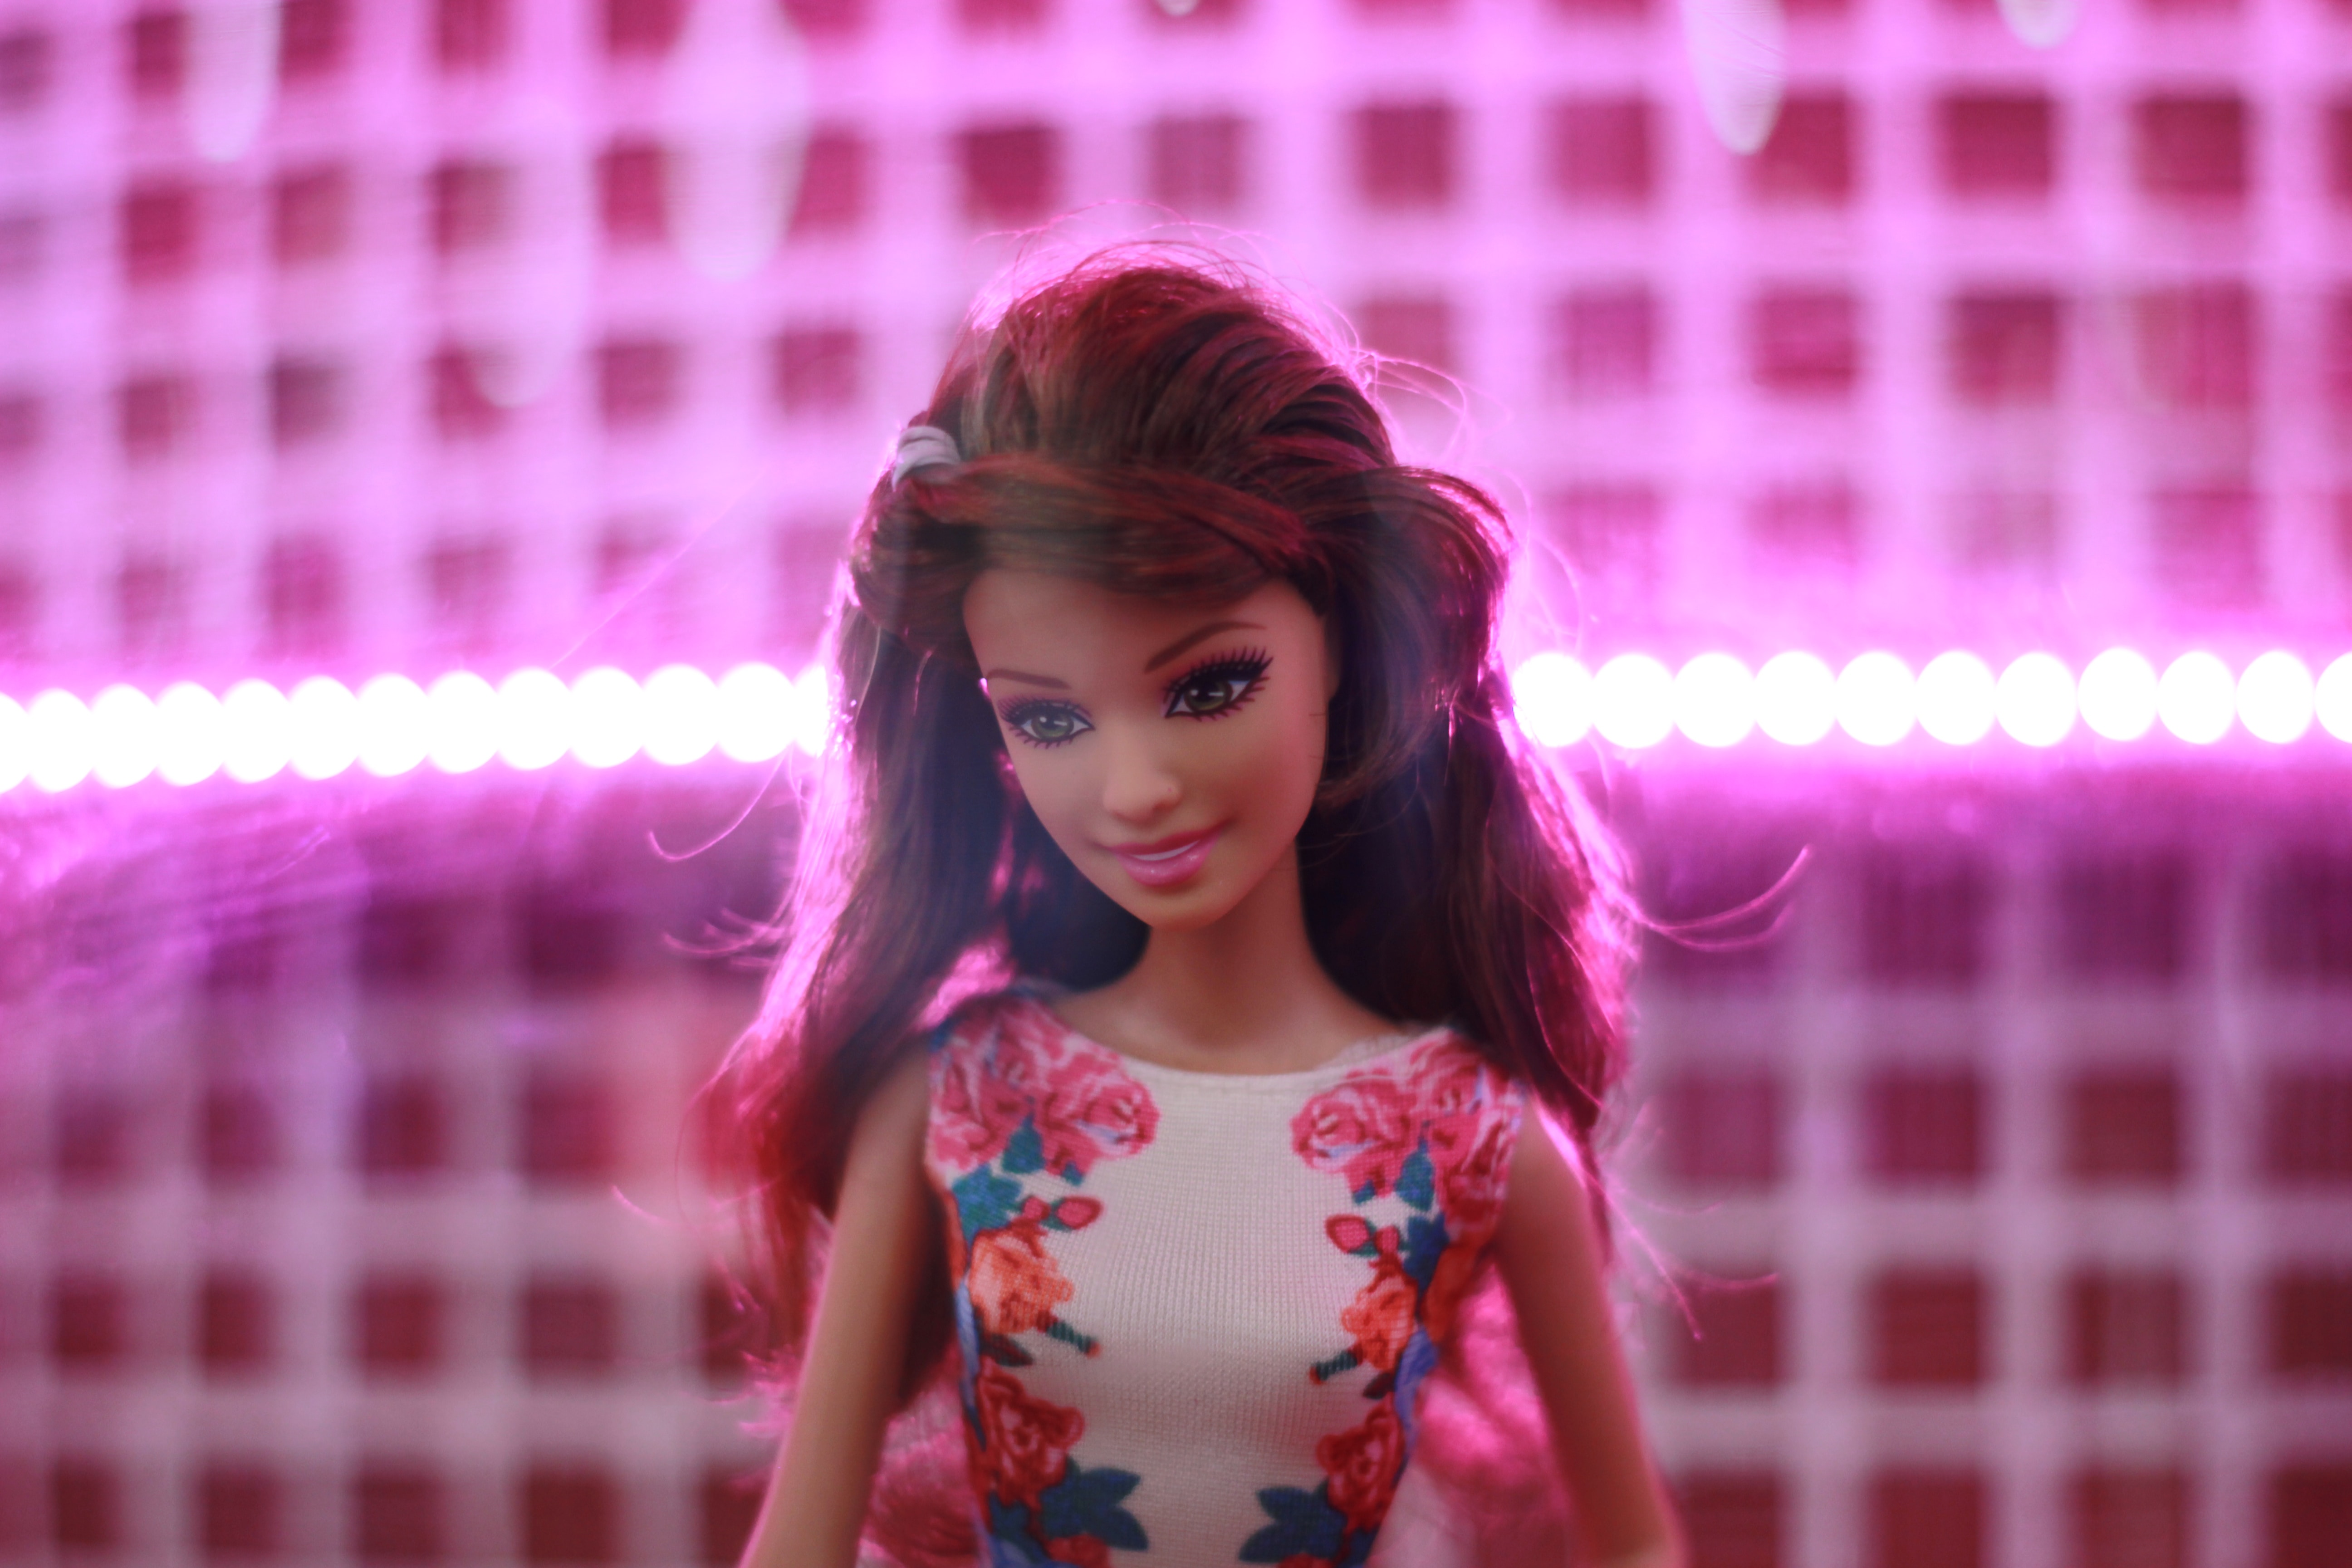 Wonderinterest | The hype surrounding the Barbie movie has returned Mattel to the spotlight